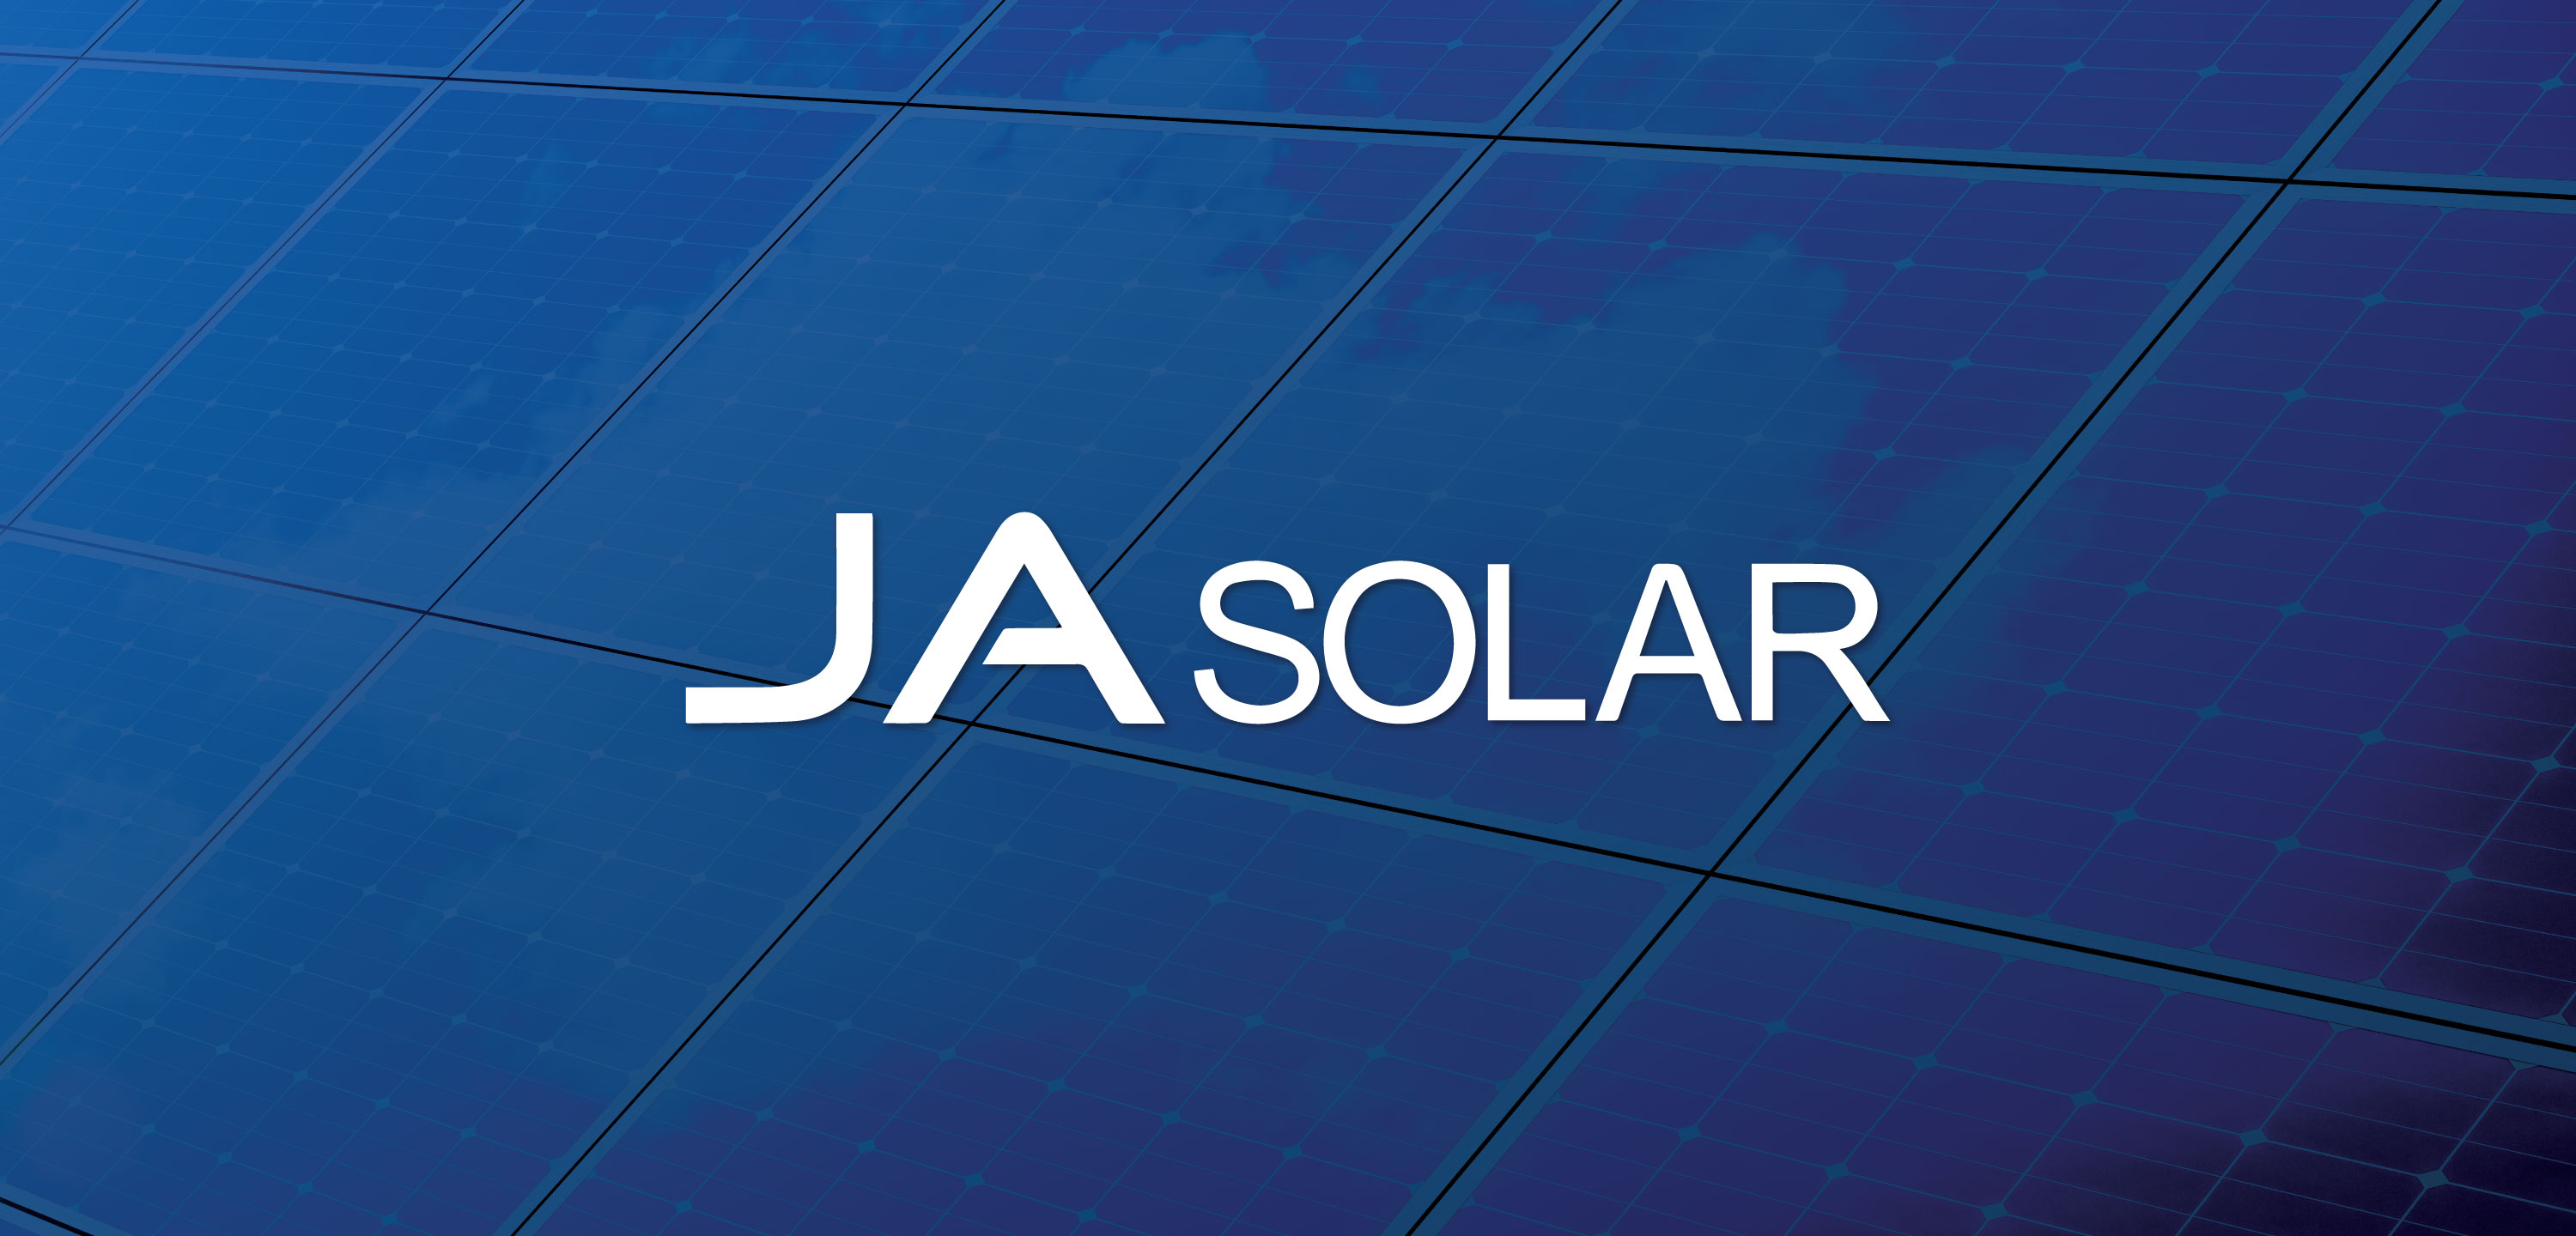 Are JA Solar panels a good option for home solar?